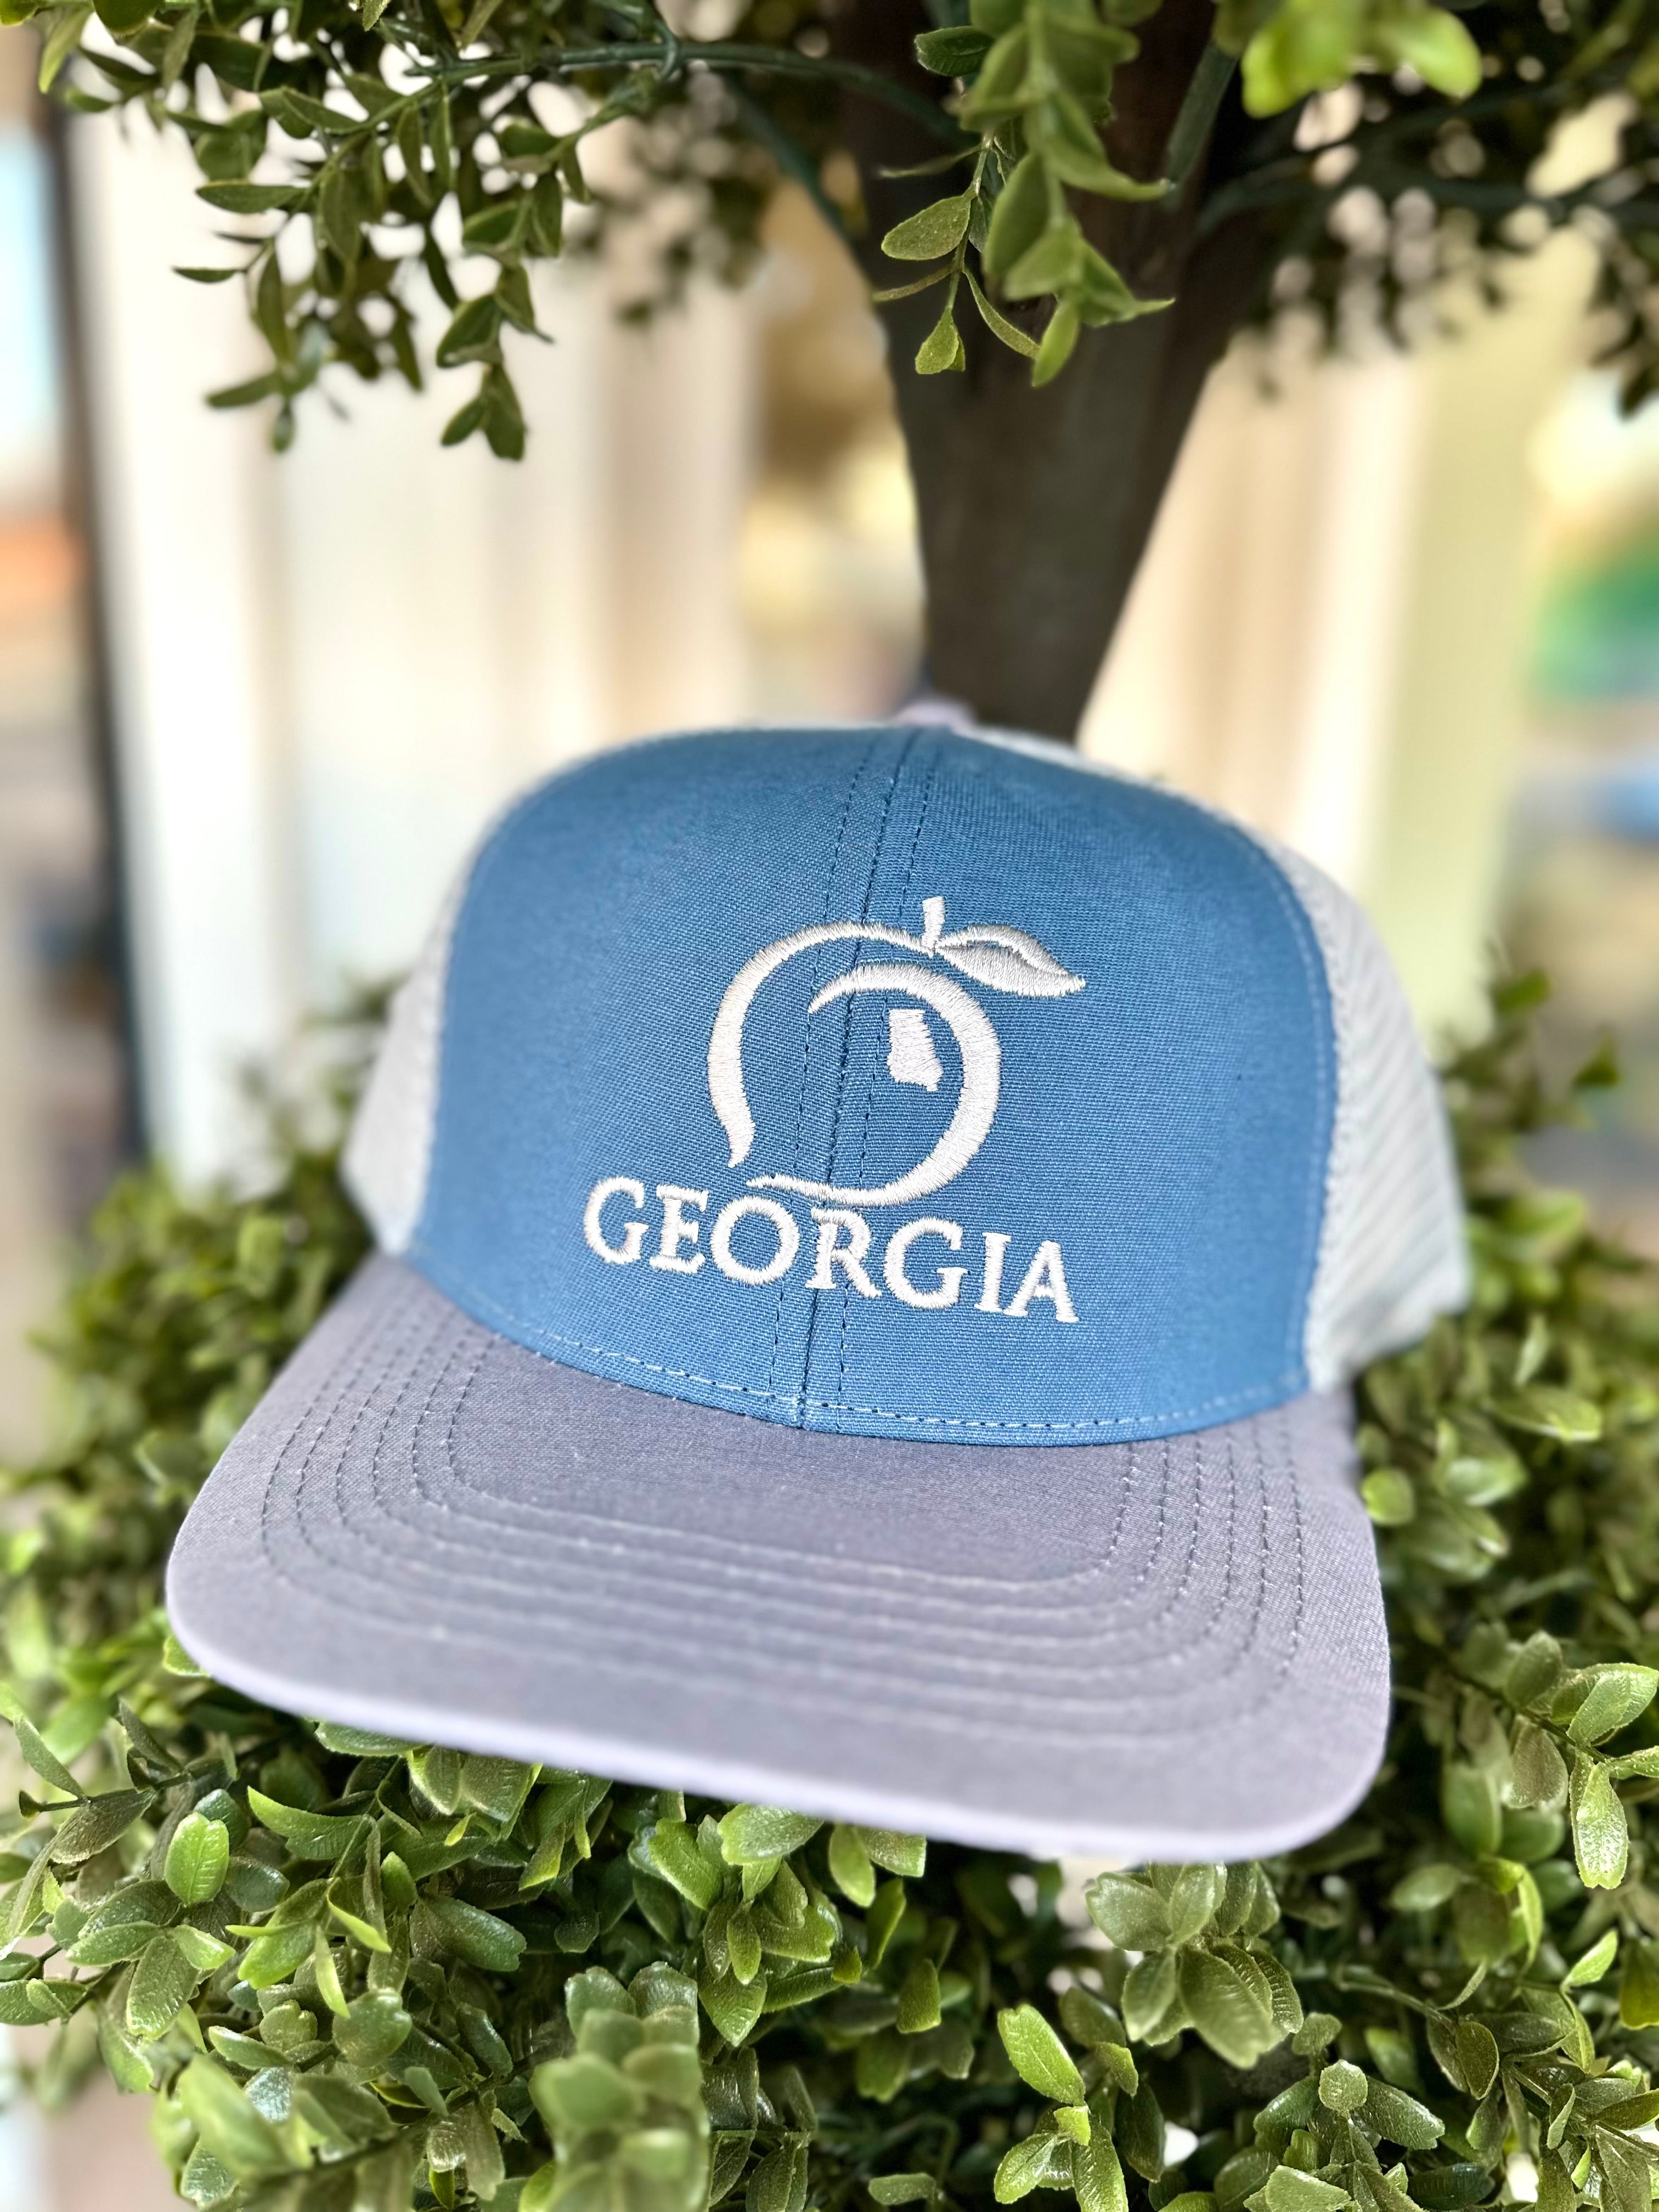 Original Georgia Trucker Hat in Blue and Gray by Peach State Pride